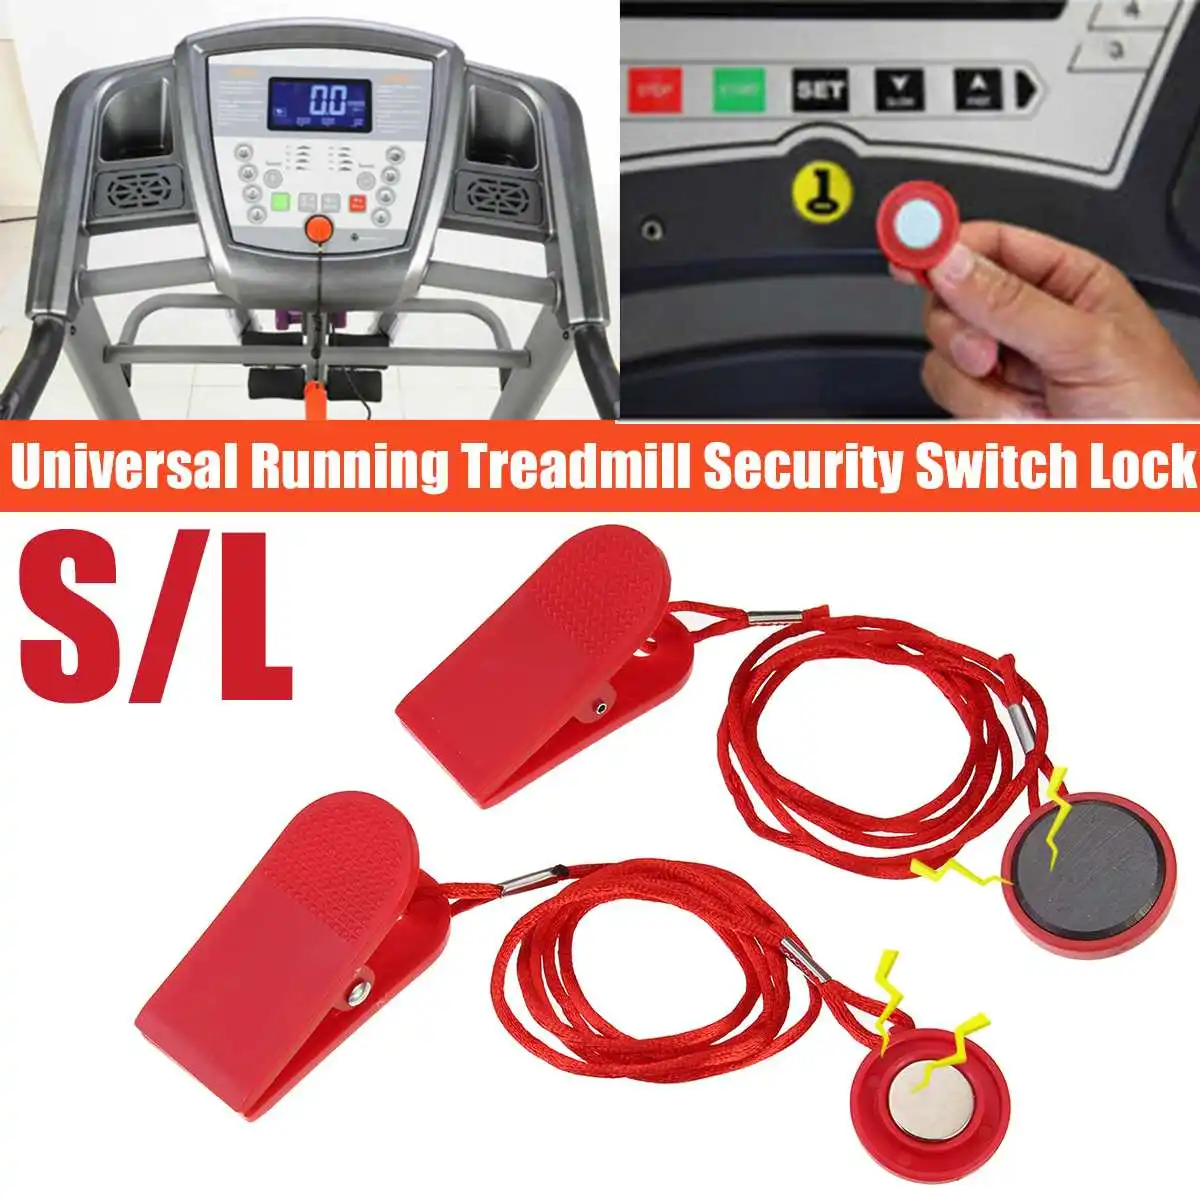 Universal Running Machine Safety Key Treadmill Magnetic Security Switch Lock UK 